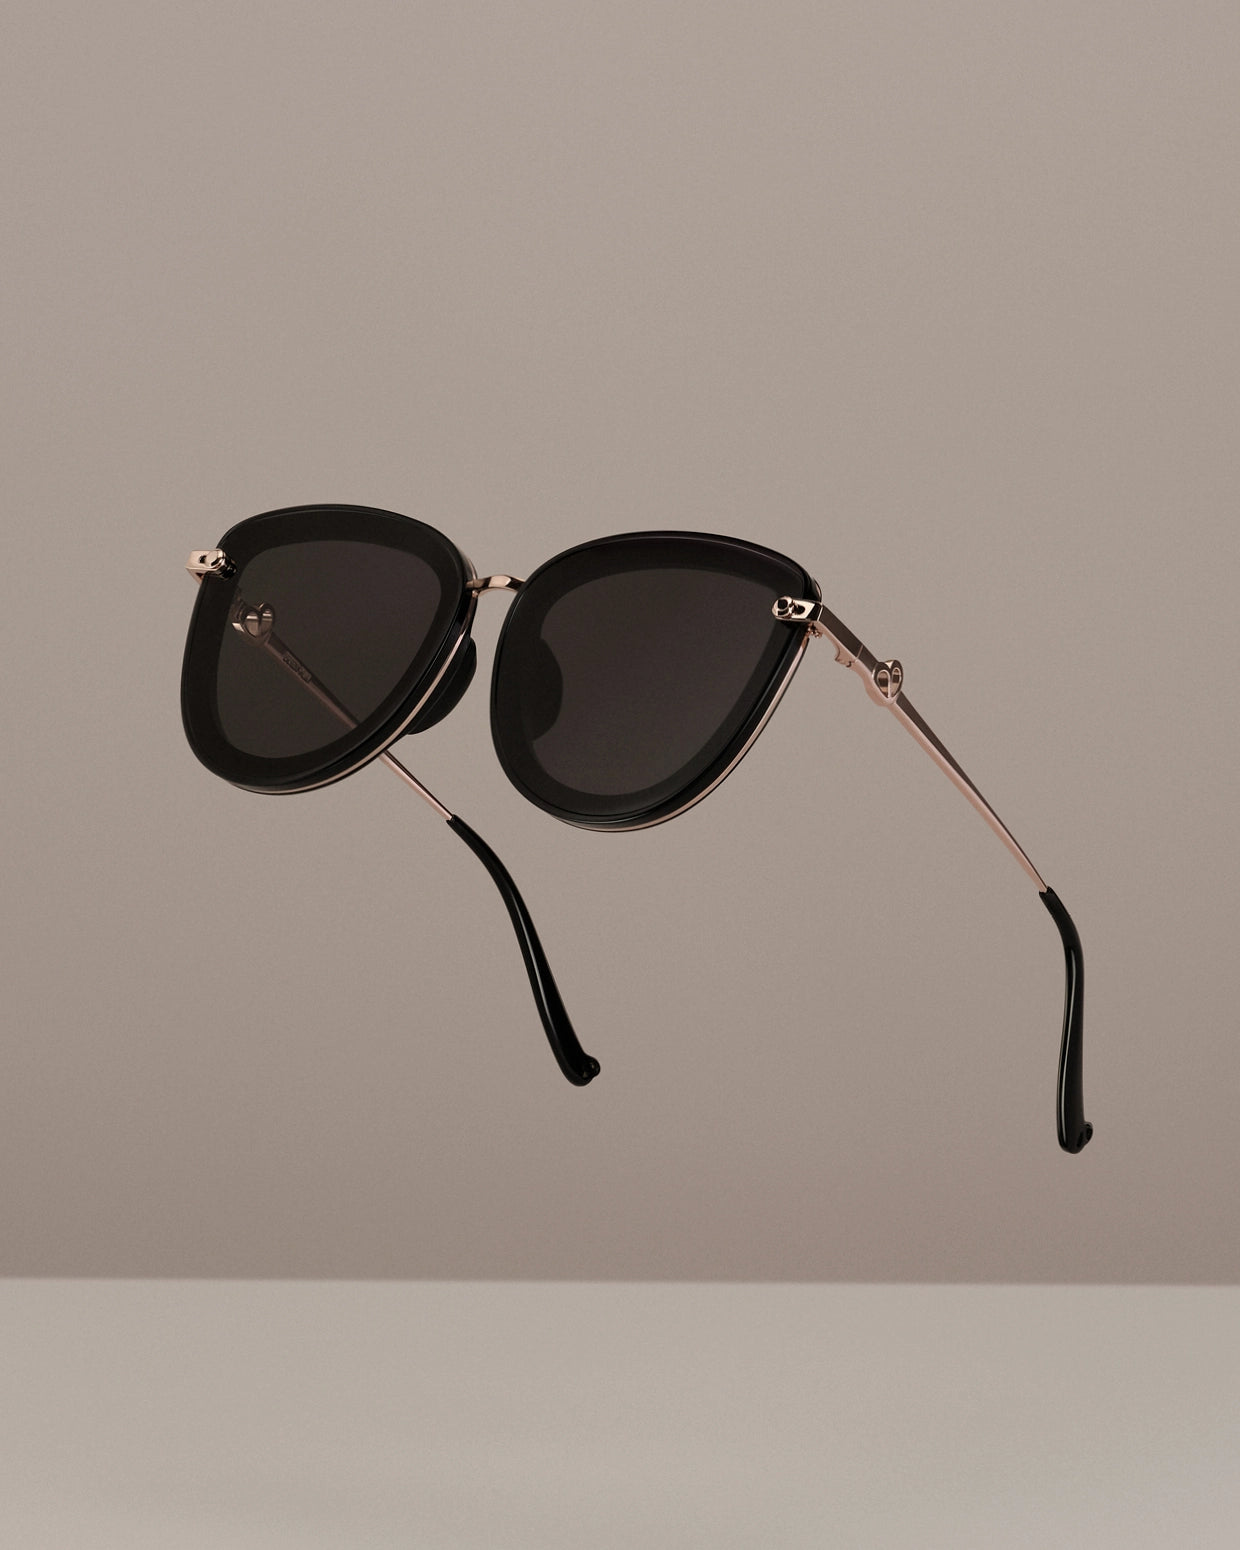 Julia G1 Sunglasses – Elegant Cat-Eye Design